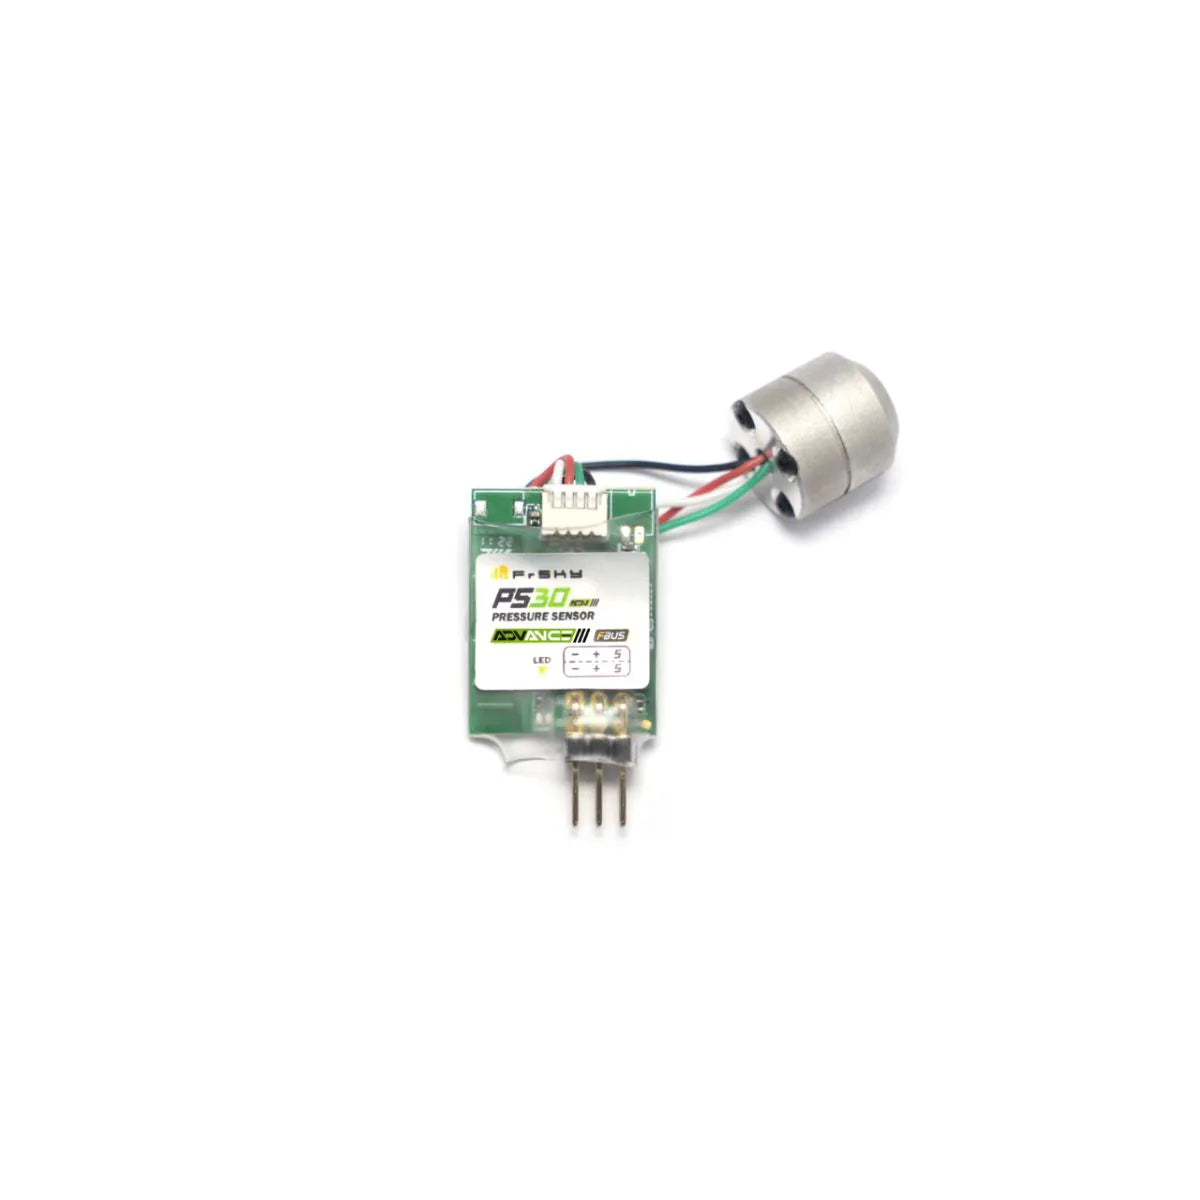 FrSky PS30 ADV Pressure Sensor - Measurement Range 0-30Bar (435psi) Compatible with FBUS/S.Port protocol